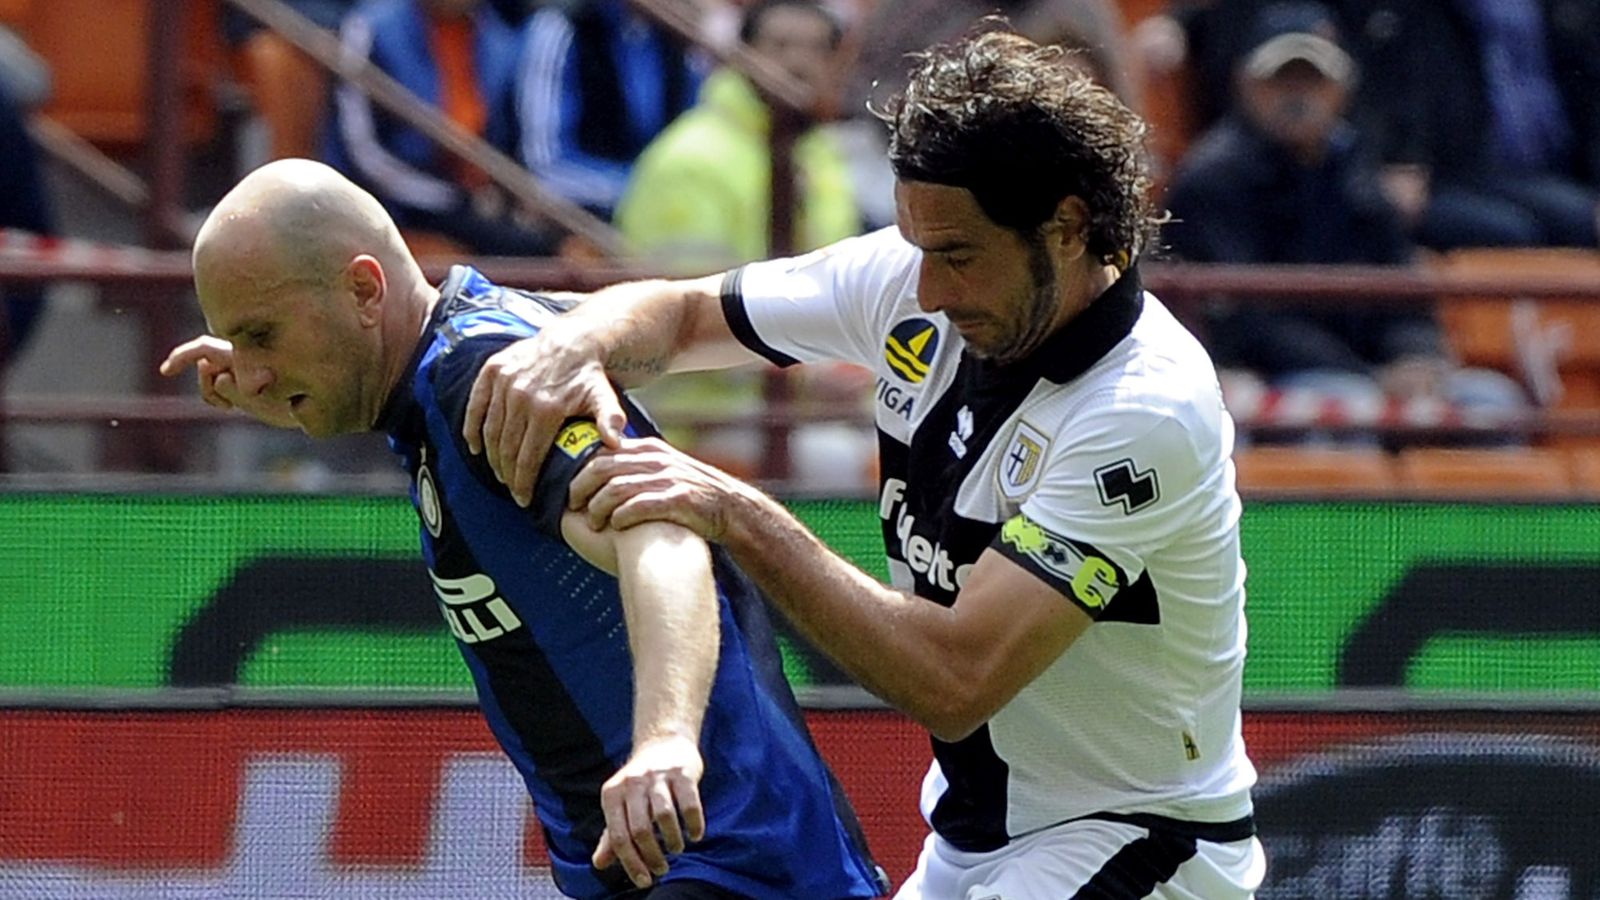 Inter Milan vs. Parma, Final Score 1-0: Inter unconvincing but Rocchi